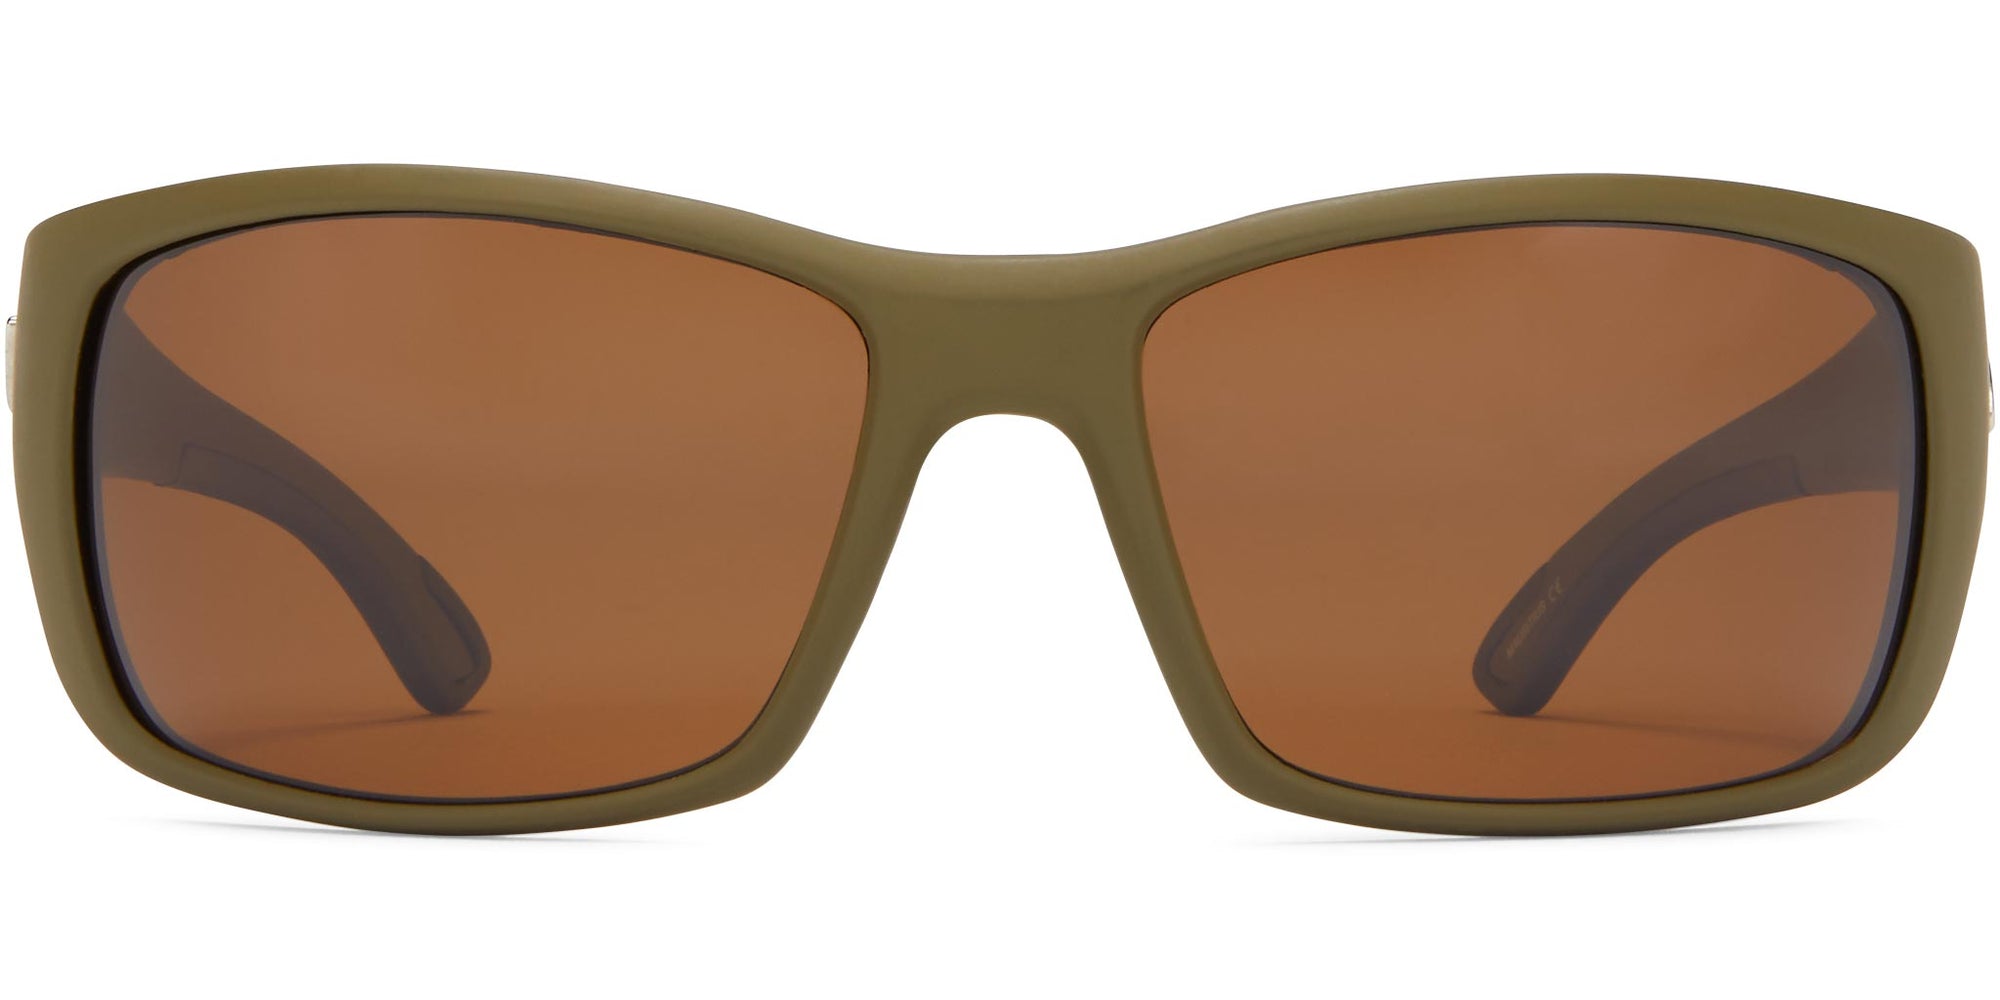 Keel - Matte Green/Brown Lens - Polarized Sunglasses